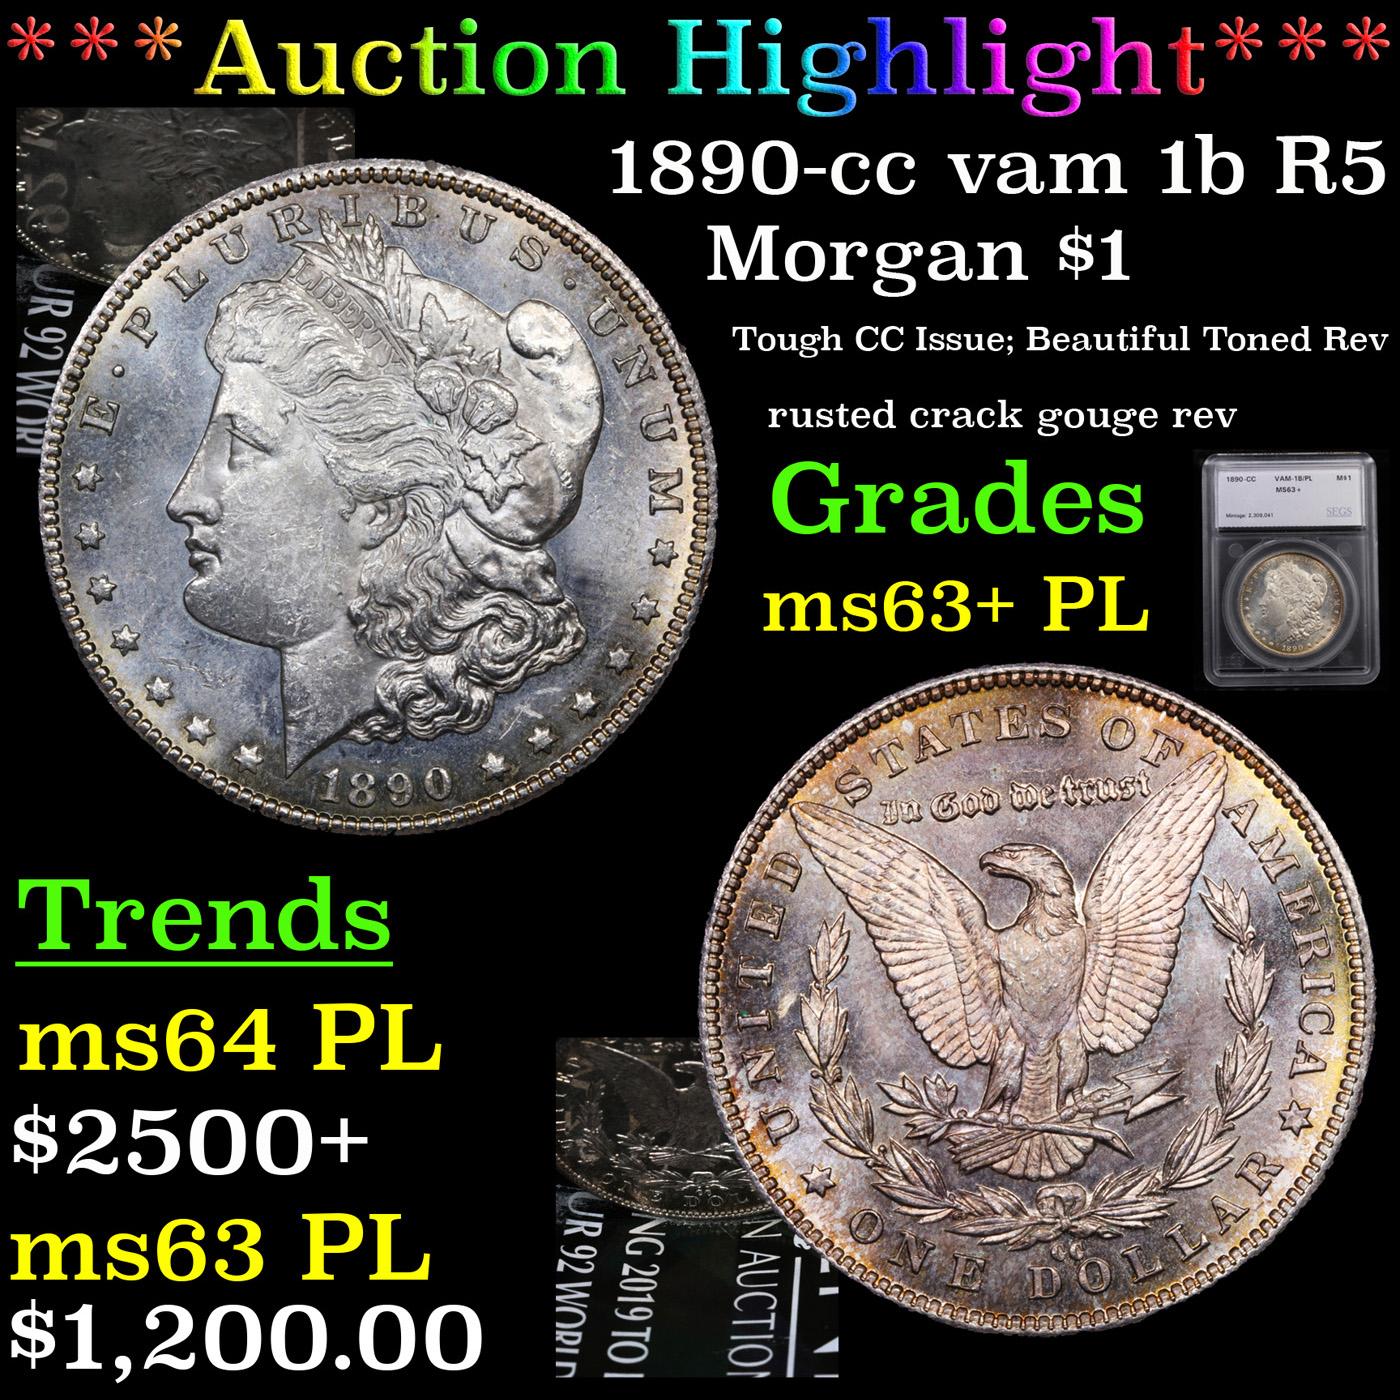 ***Auction Highlight*** 1890-cc vam 1b R5 Morgan Dollar $1 Graded ms63+ PL By SEGS (fc)